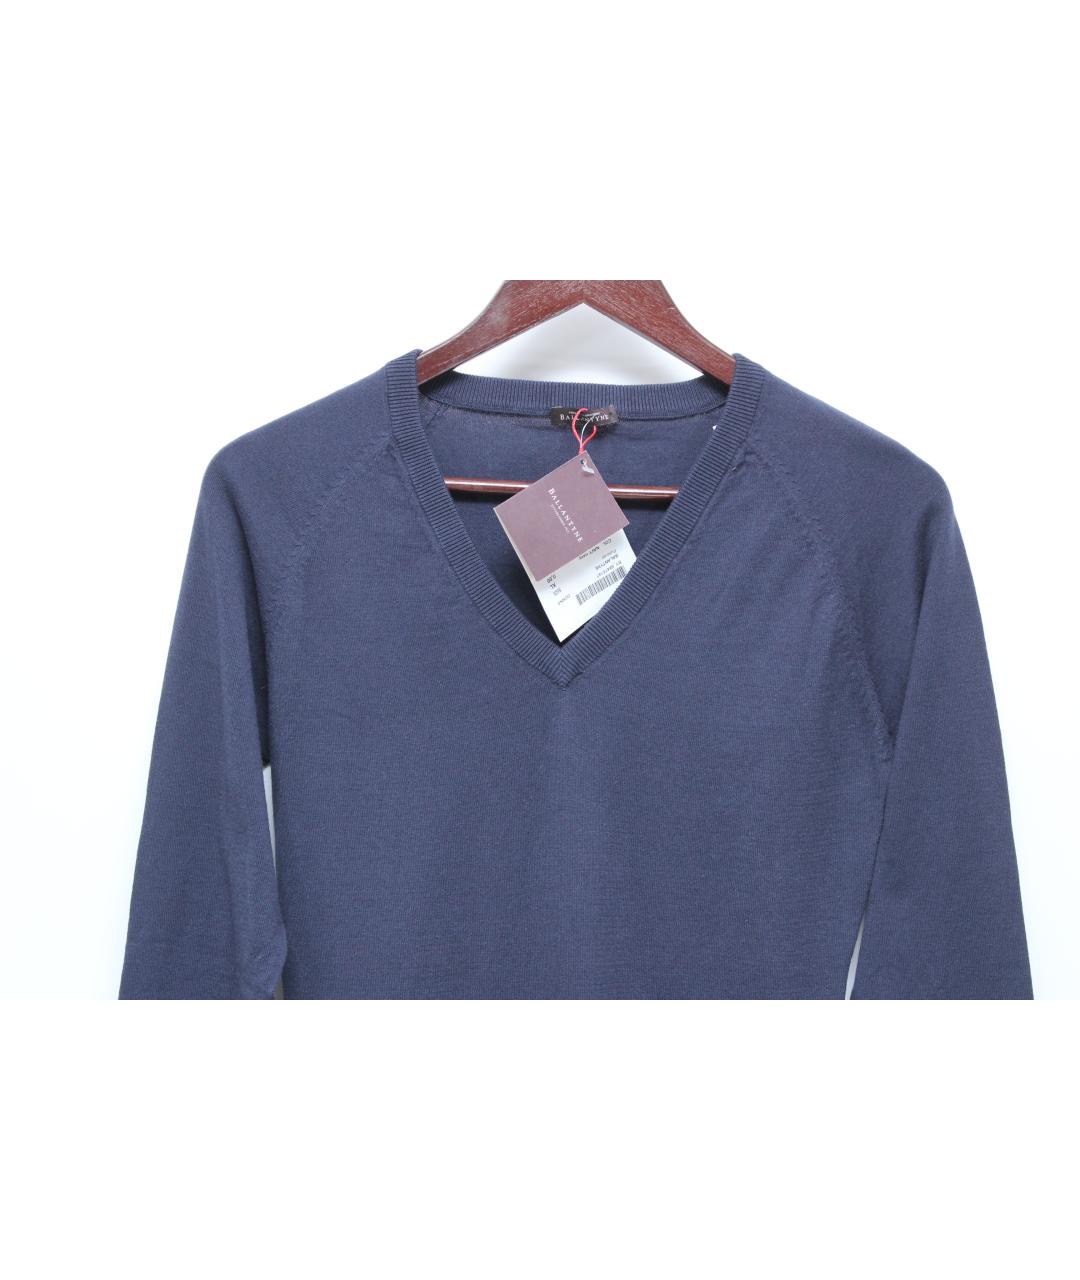 BALLANTYNE Синий хлопковый джемпер / свитер, фото 4